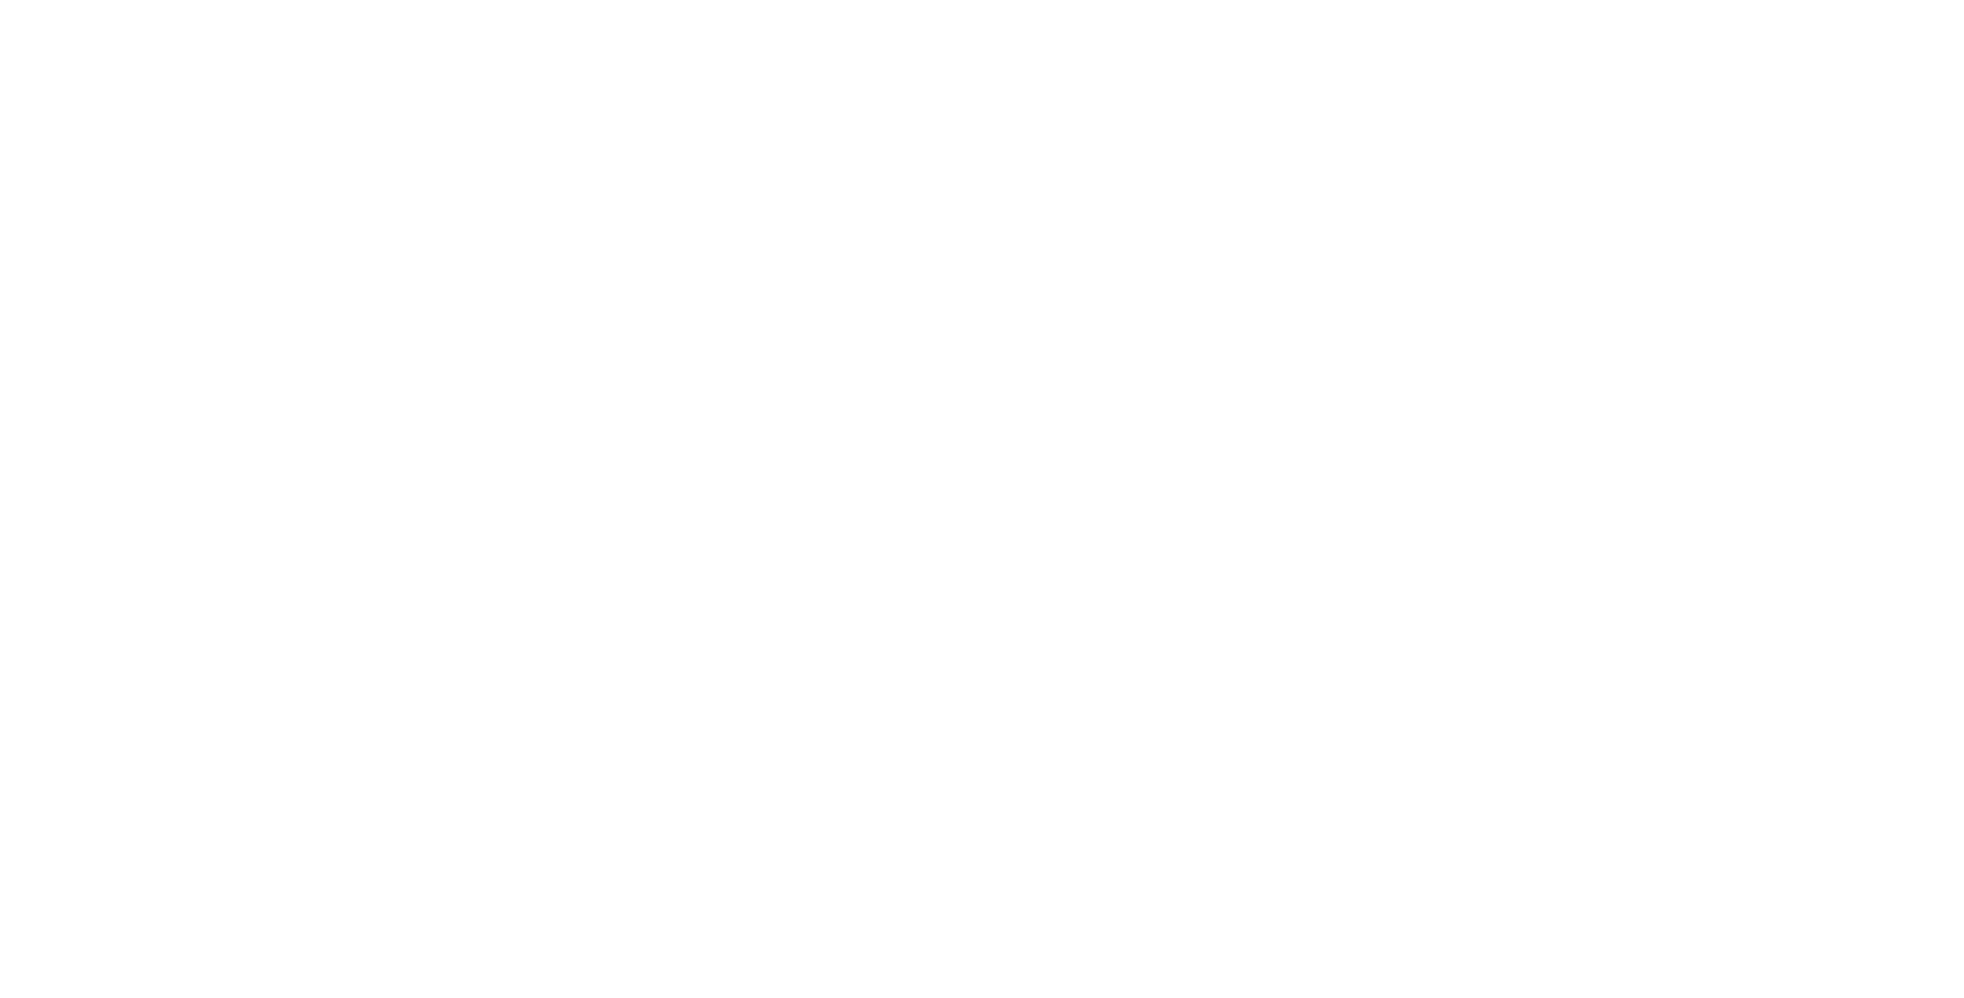 Hamburg Tourismus Logo